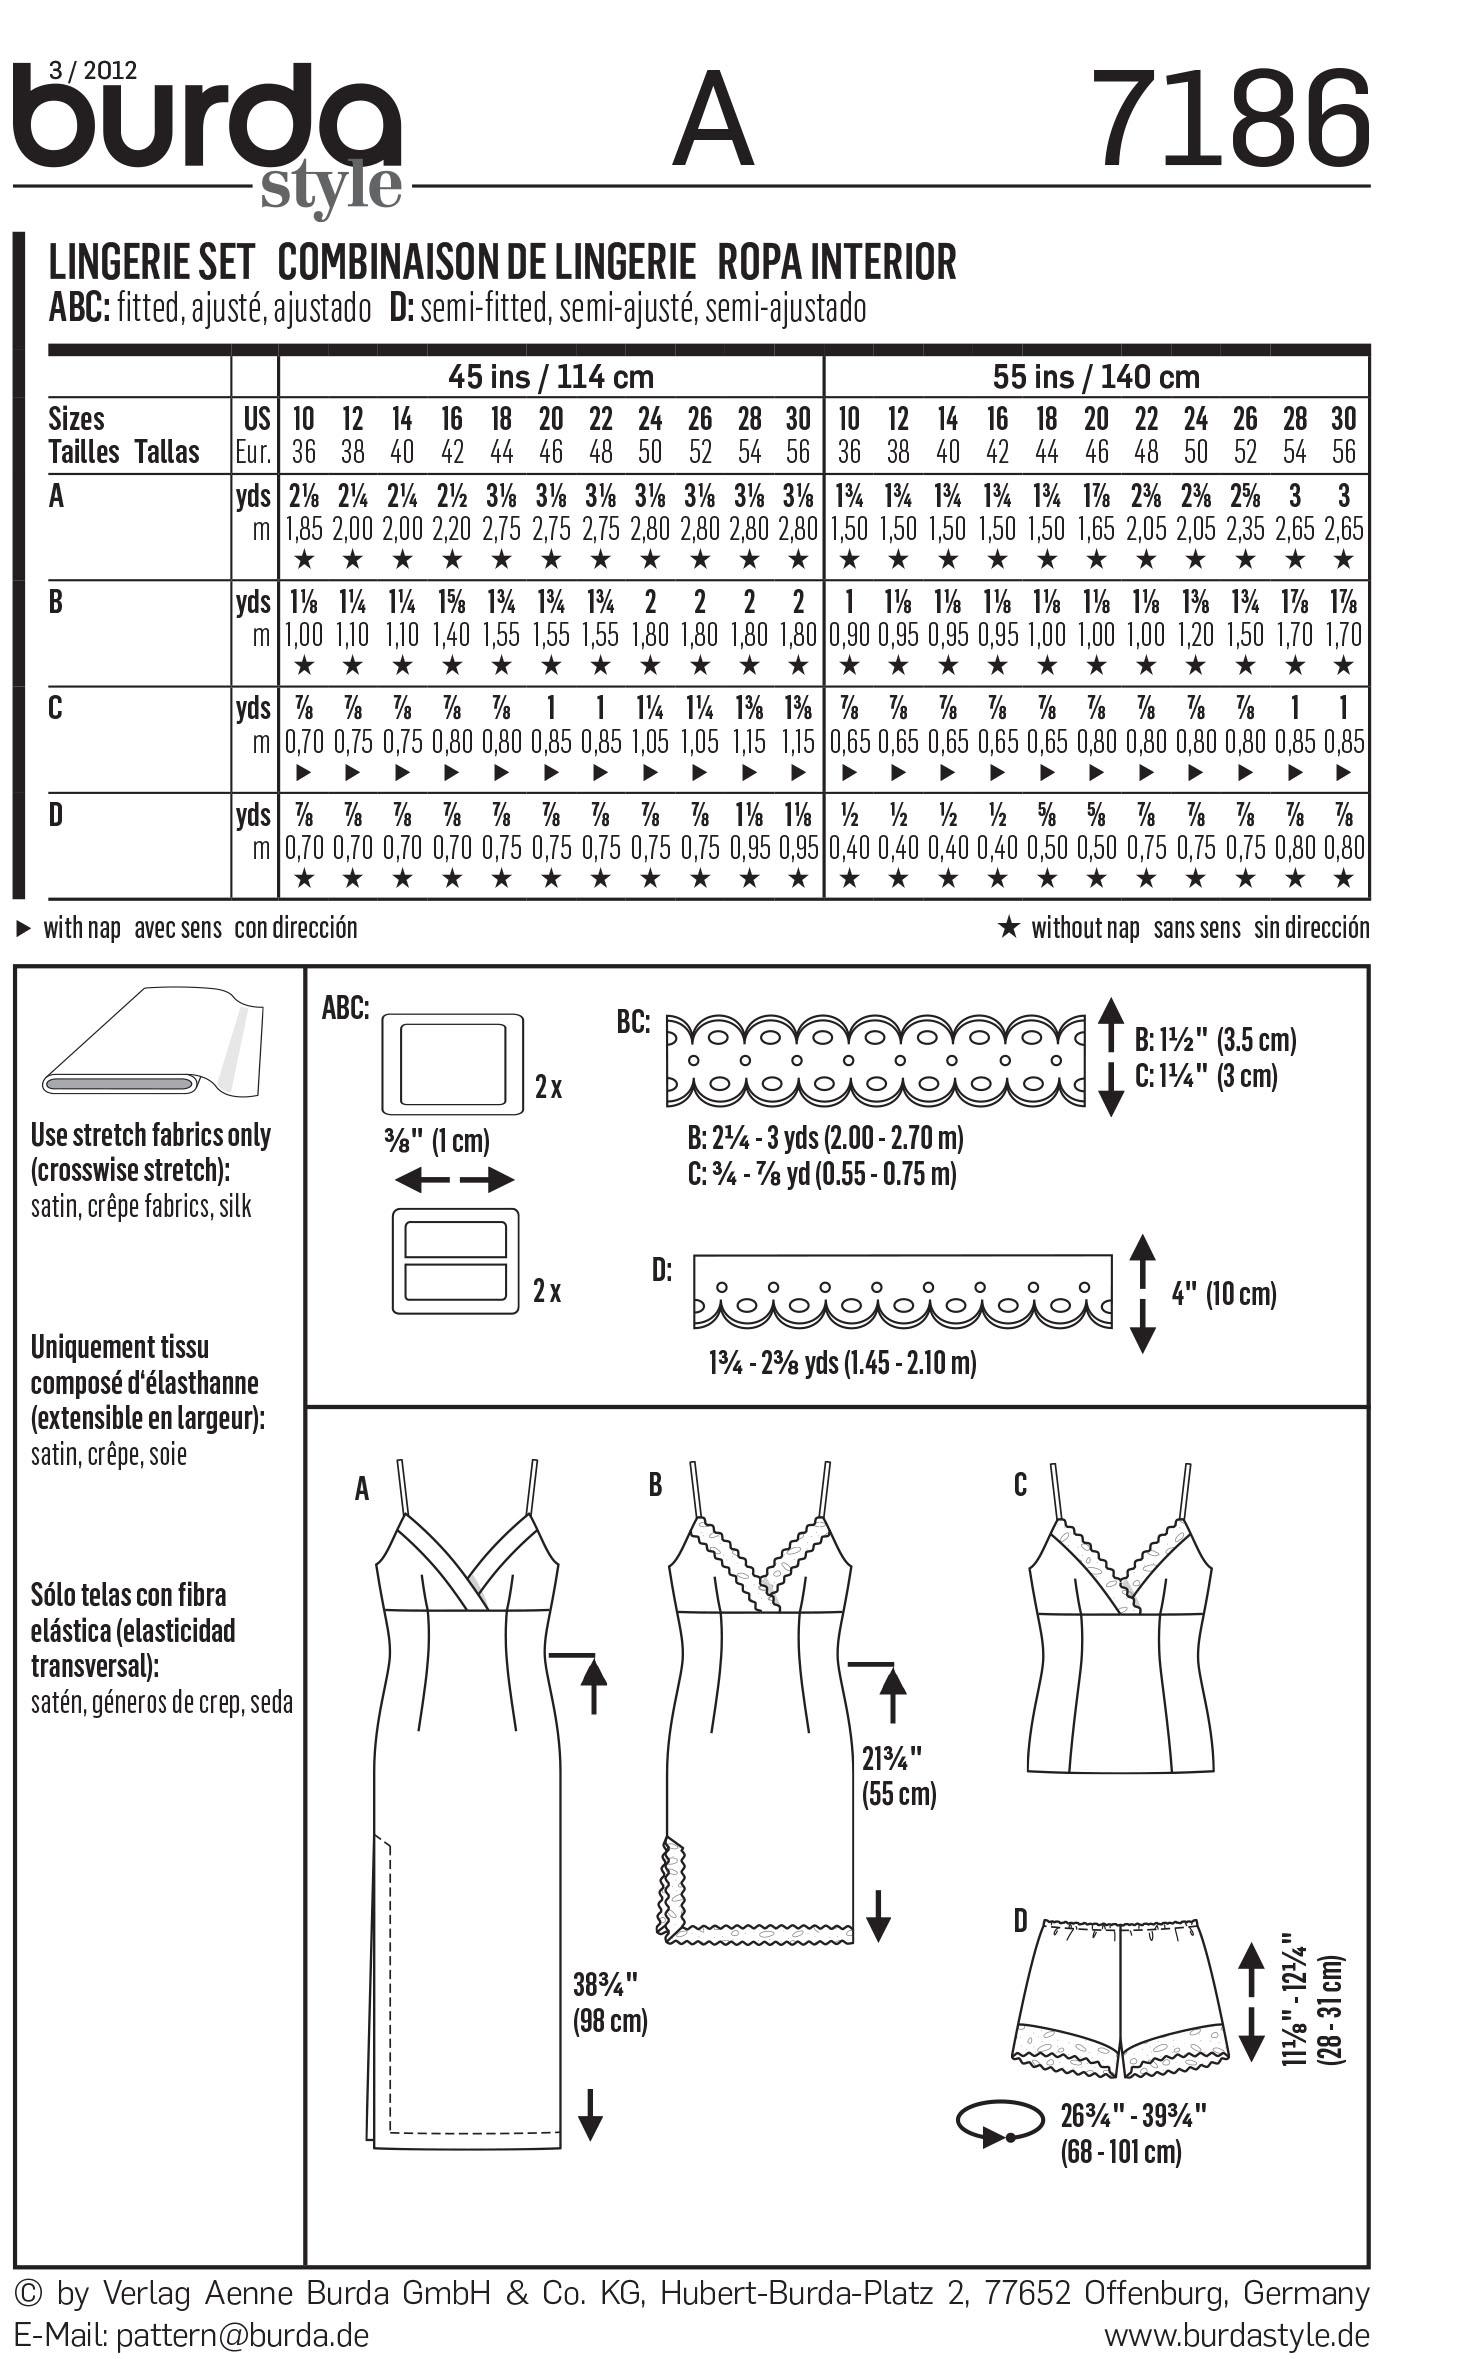 Burda B7186 History Sewing Pattern